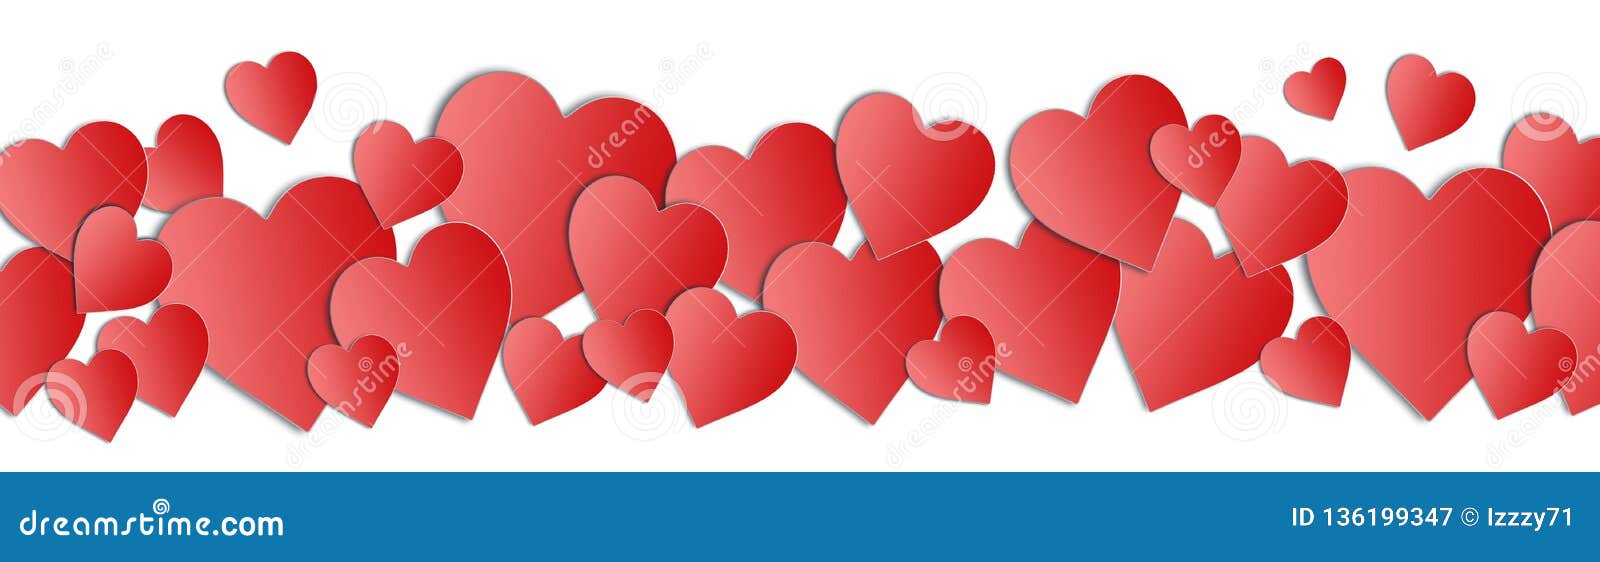 valentines day hearts. valentines day border. hearts background